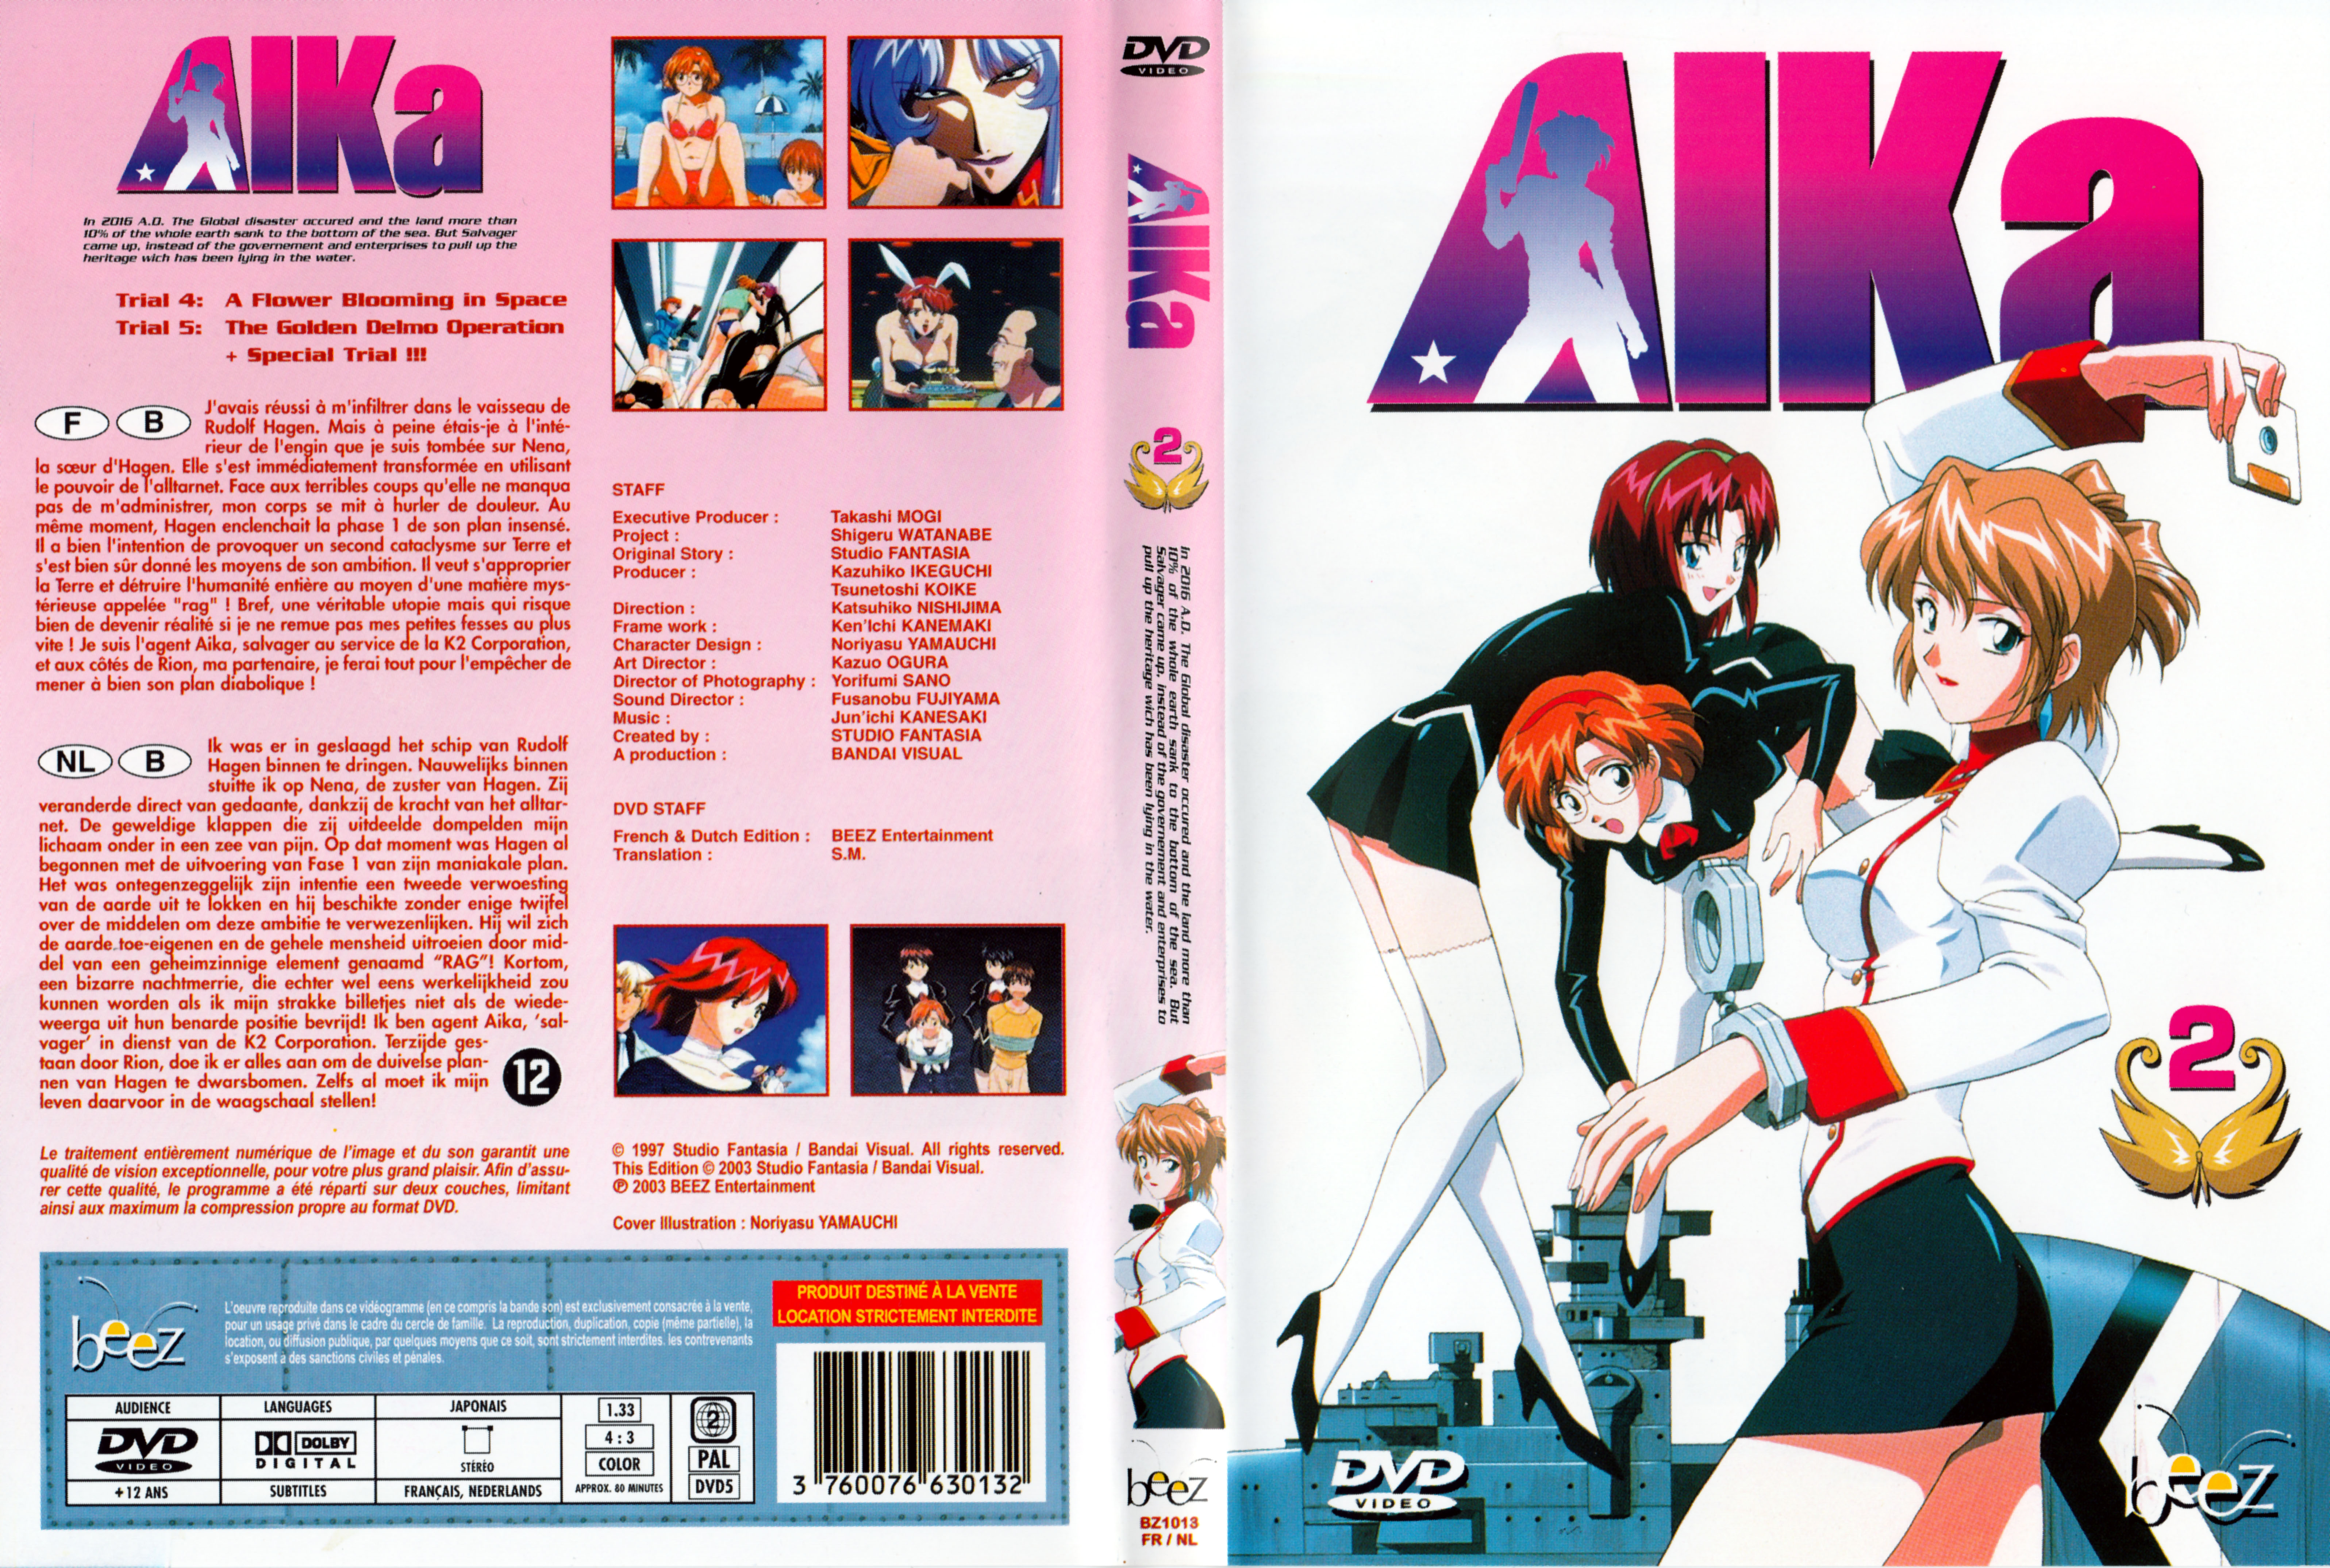 Jaquette DVD Aika Vol 2